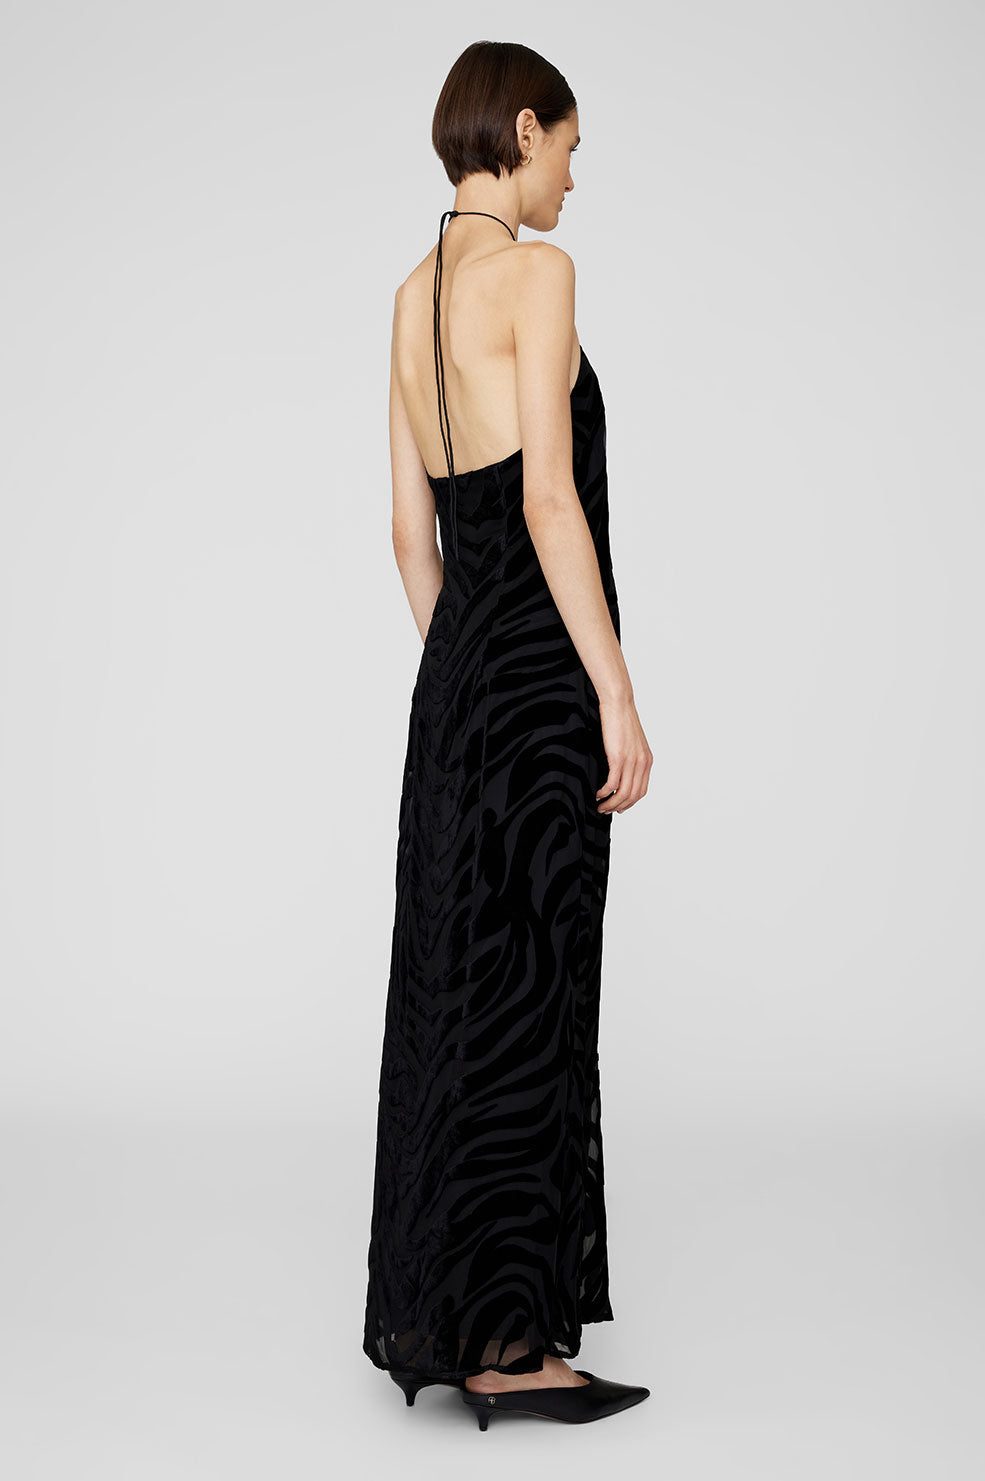 ANINE BING Leanne Dress - Black Zebra Burnout - On Model Back